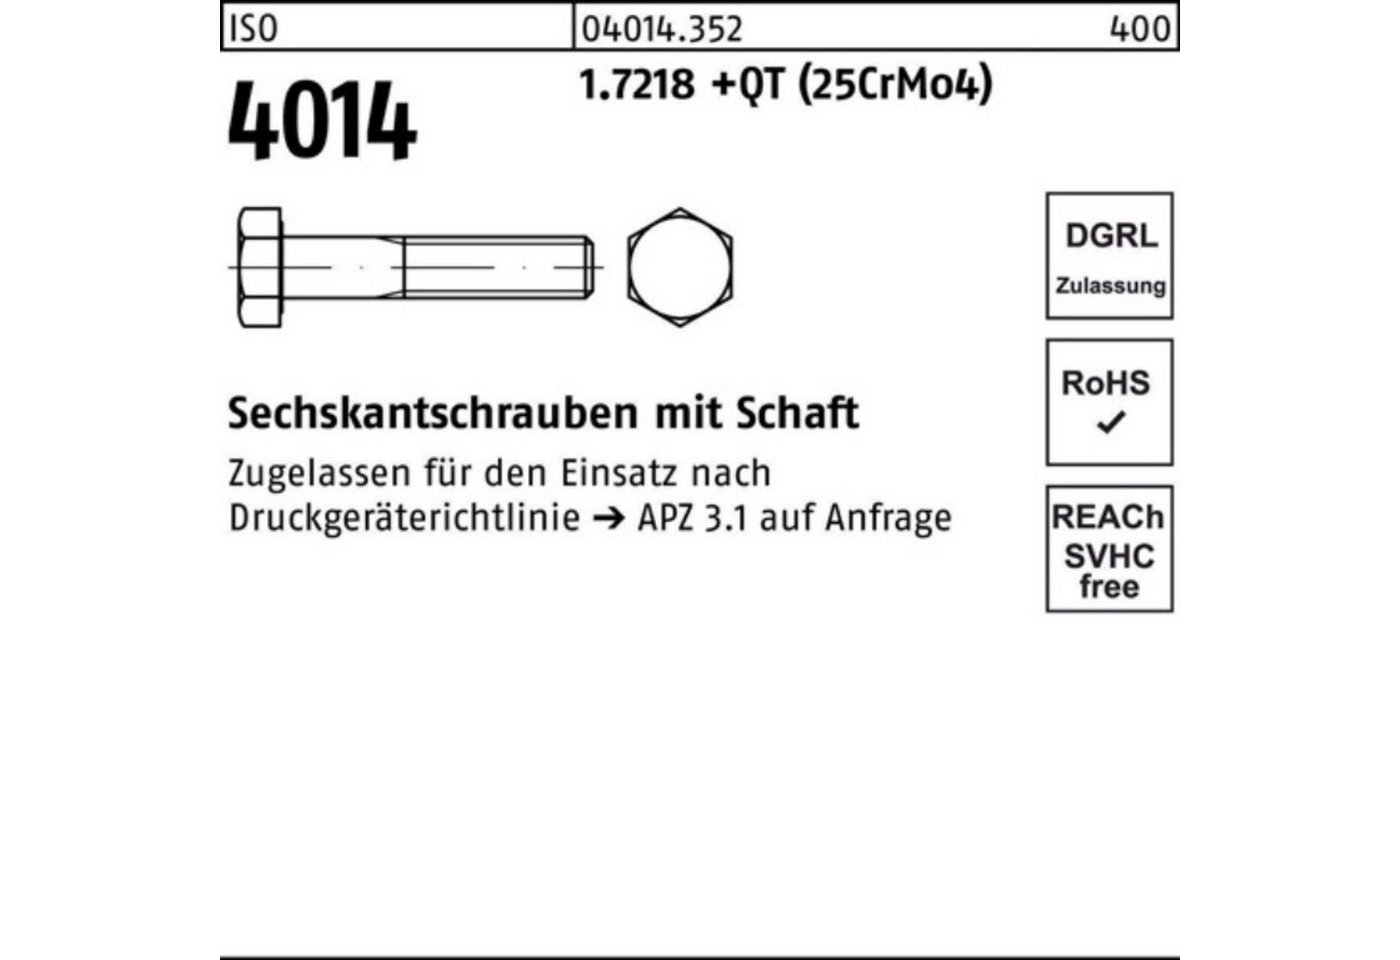 Bufab Sechskantschraube 100er Pack Sechskantschraube ISO 4014 Schaft M24x 200 1.7218 +QT (25Cr von Bufab